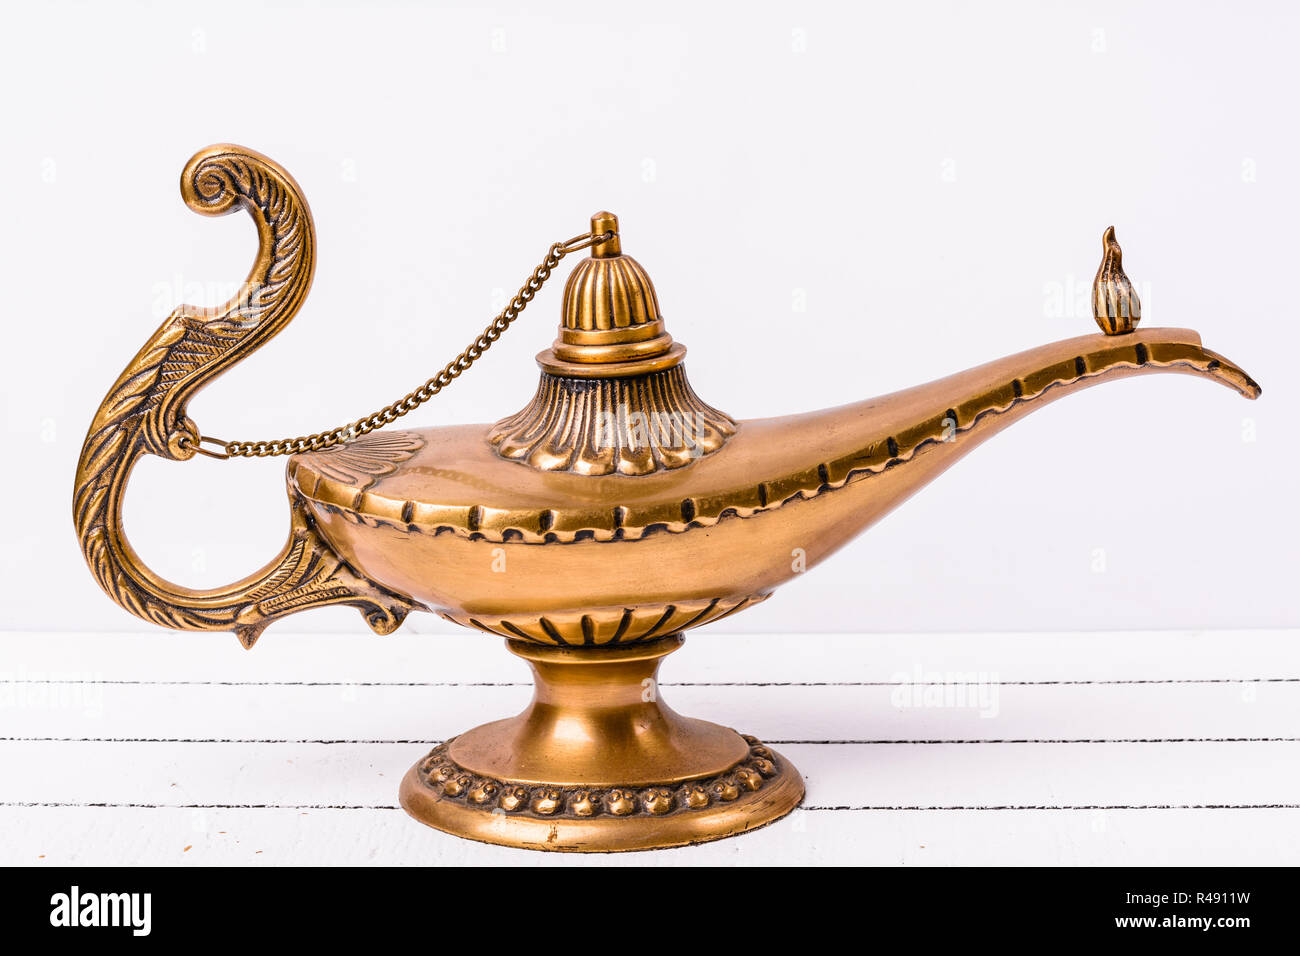 Aladdin magic lamp on white wooden background Stock Photo